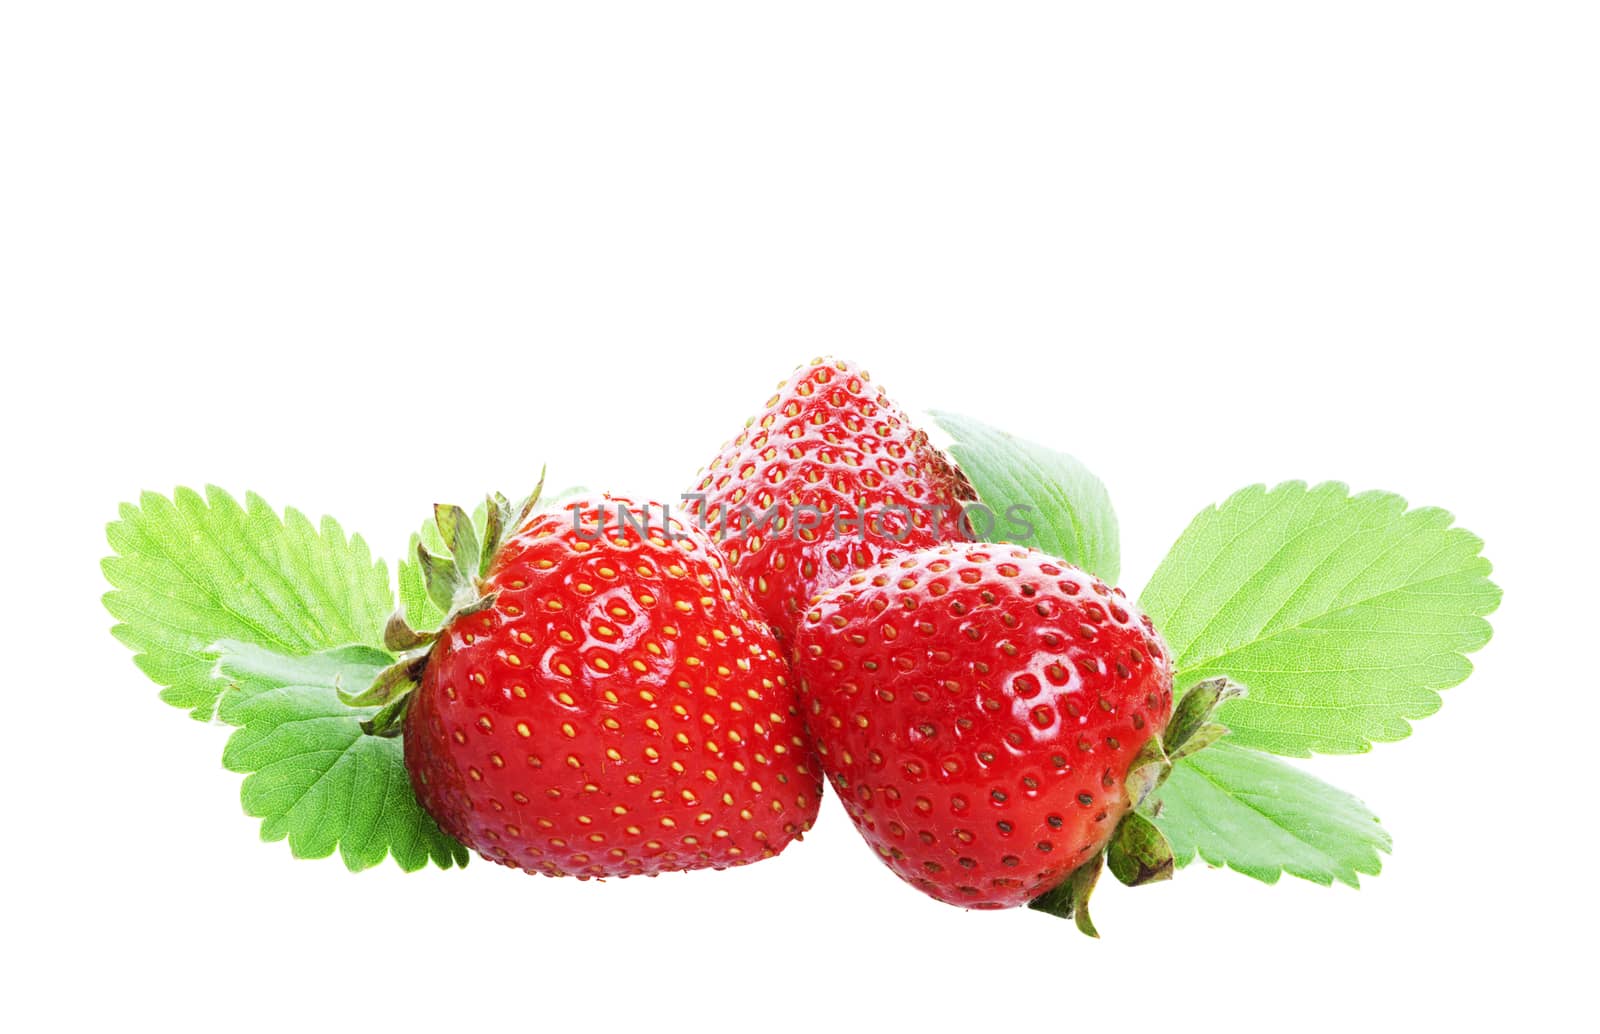 Strawberries by songbird839